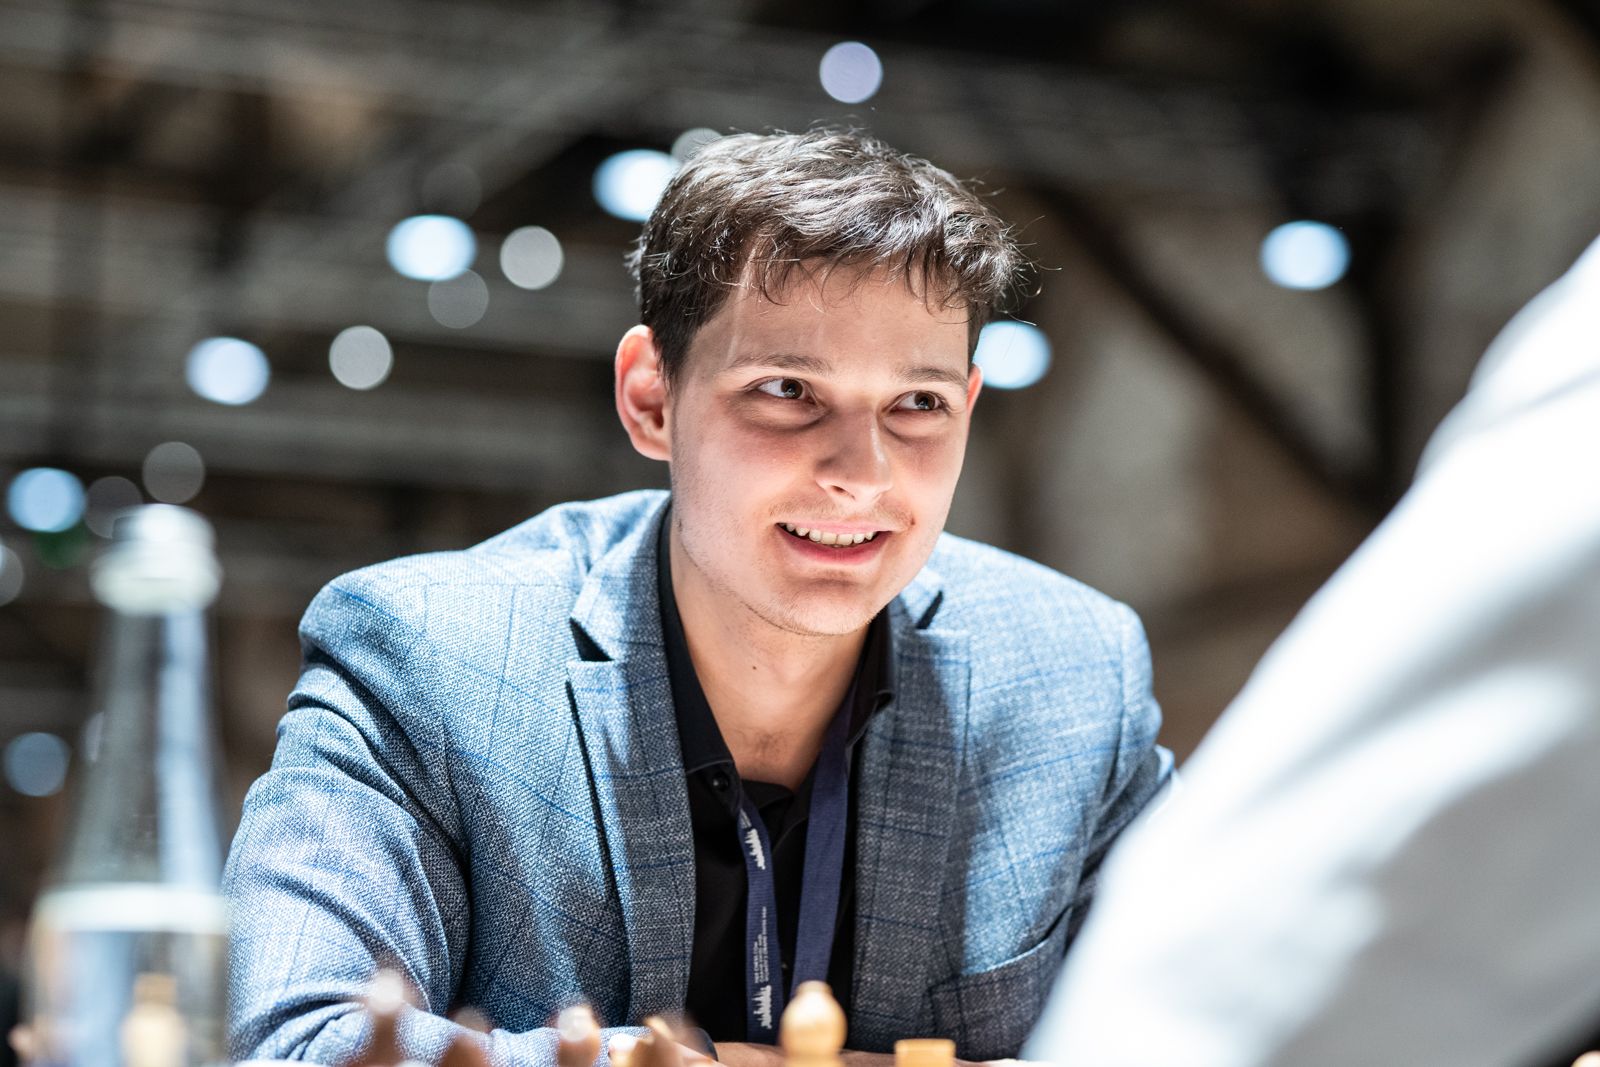 Firouzja wins Grand Swiss  Chess Rising Stars Academy